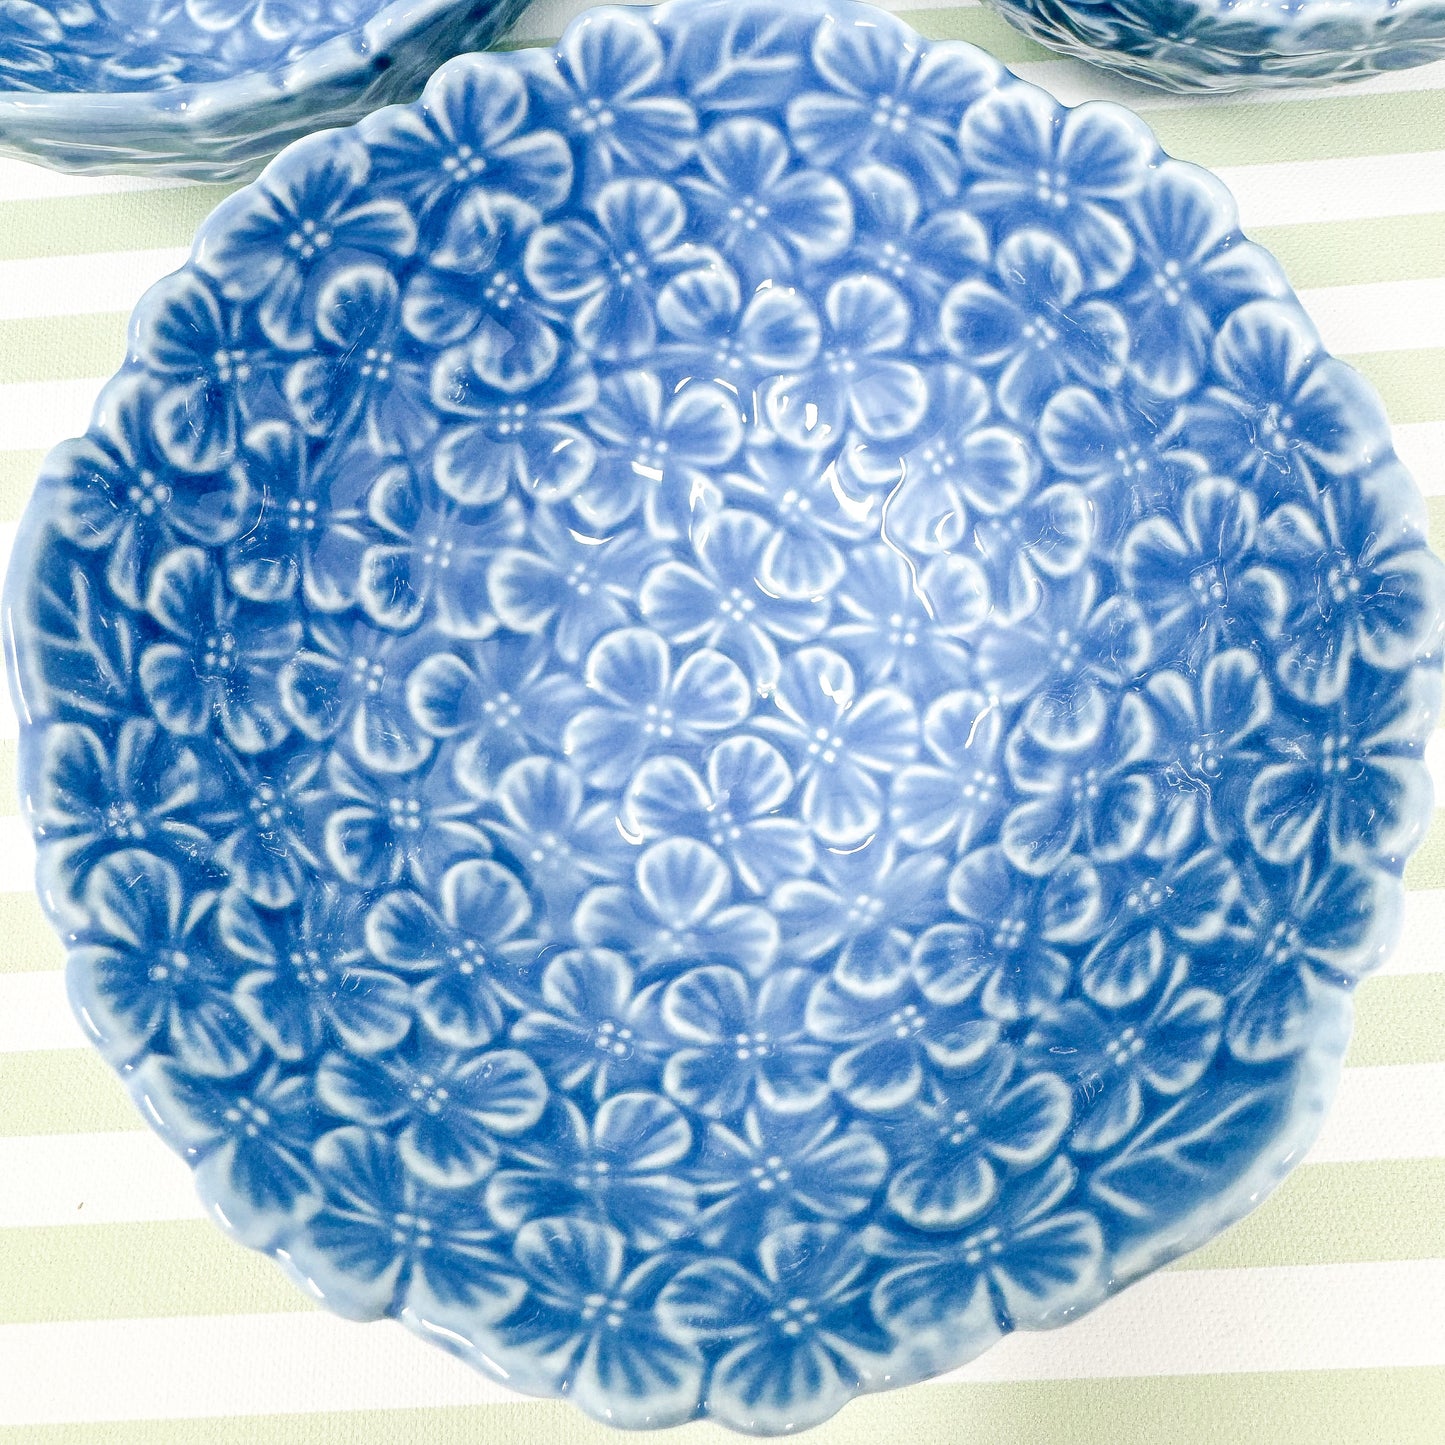 Set of 3 Blue Hydrangea Tidbit Bowls